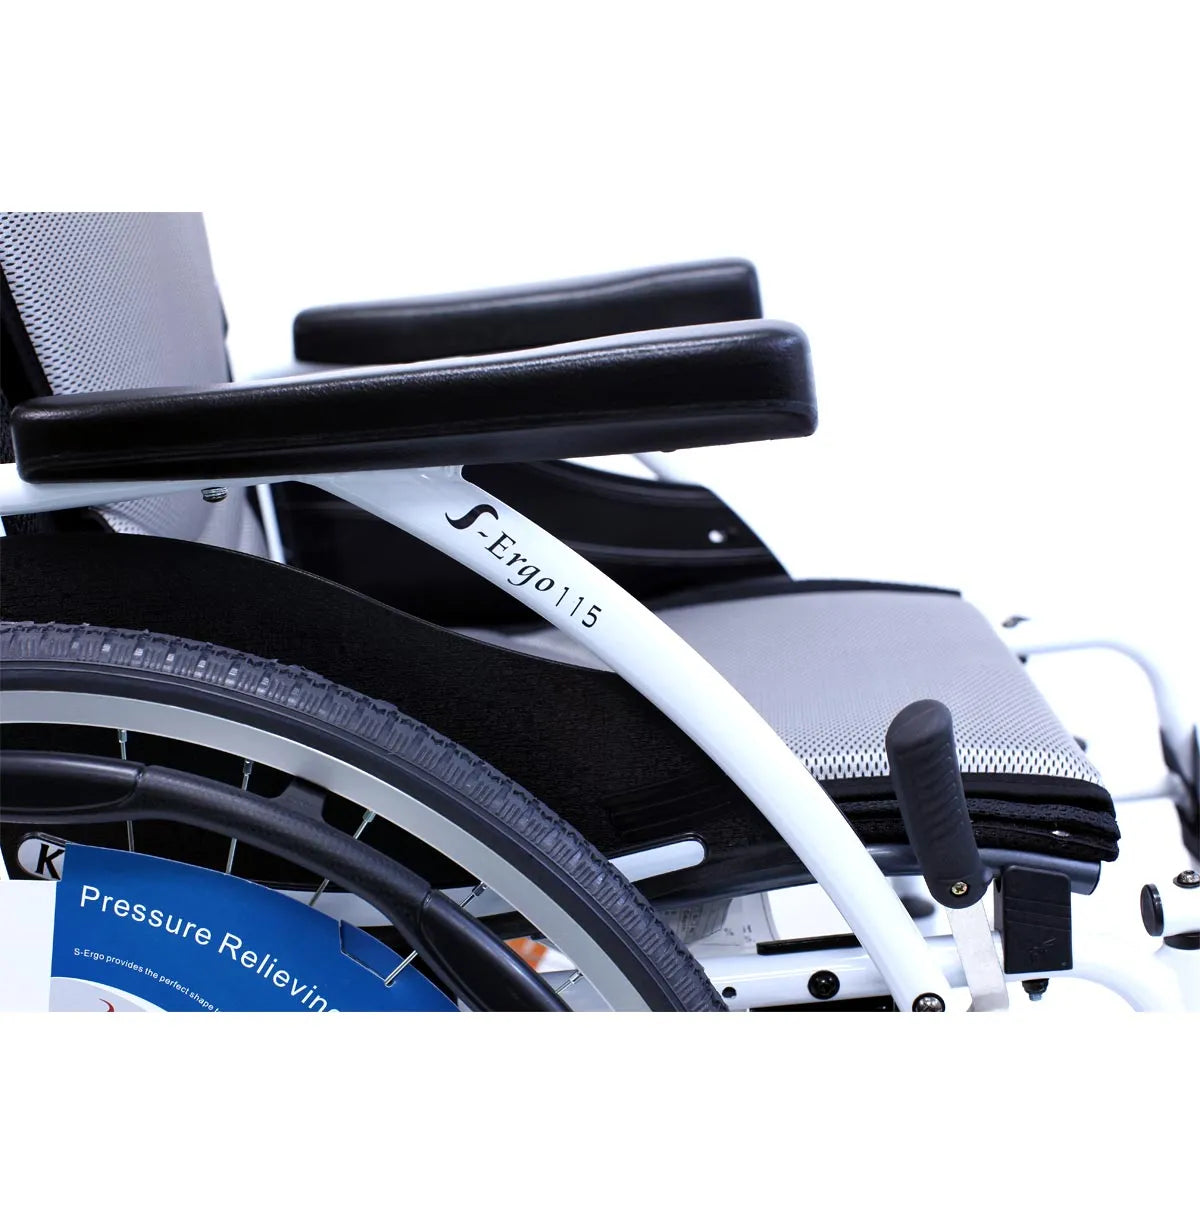 Karman Healthcare S-Ergo 115 Ultra Lightweight Ergonomic Wheelchair with Swing Away Footrest in White